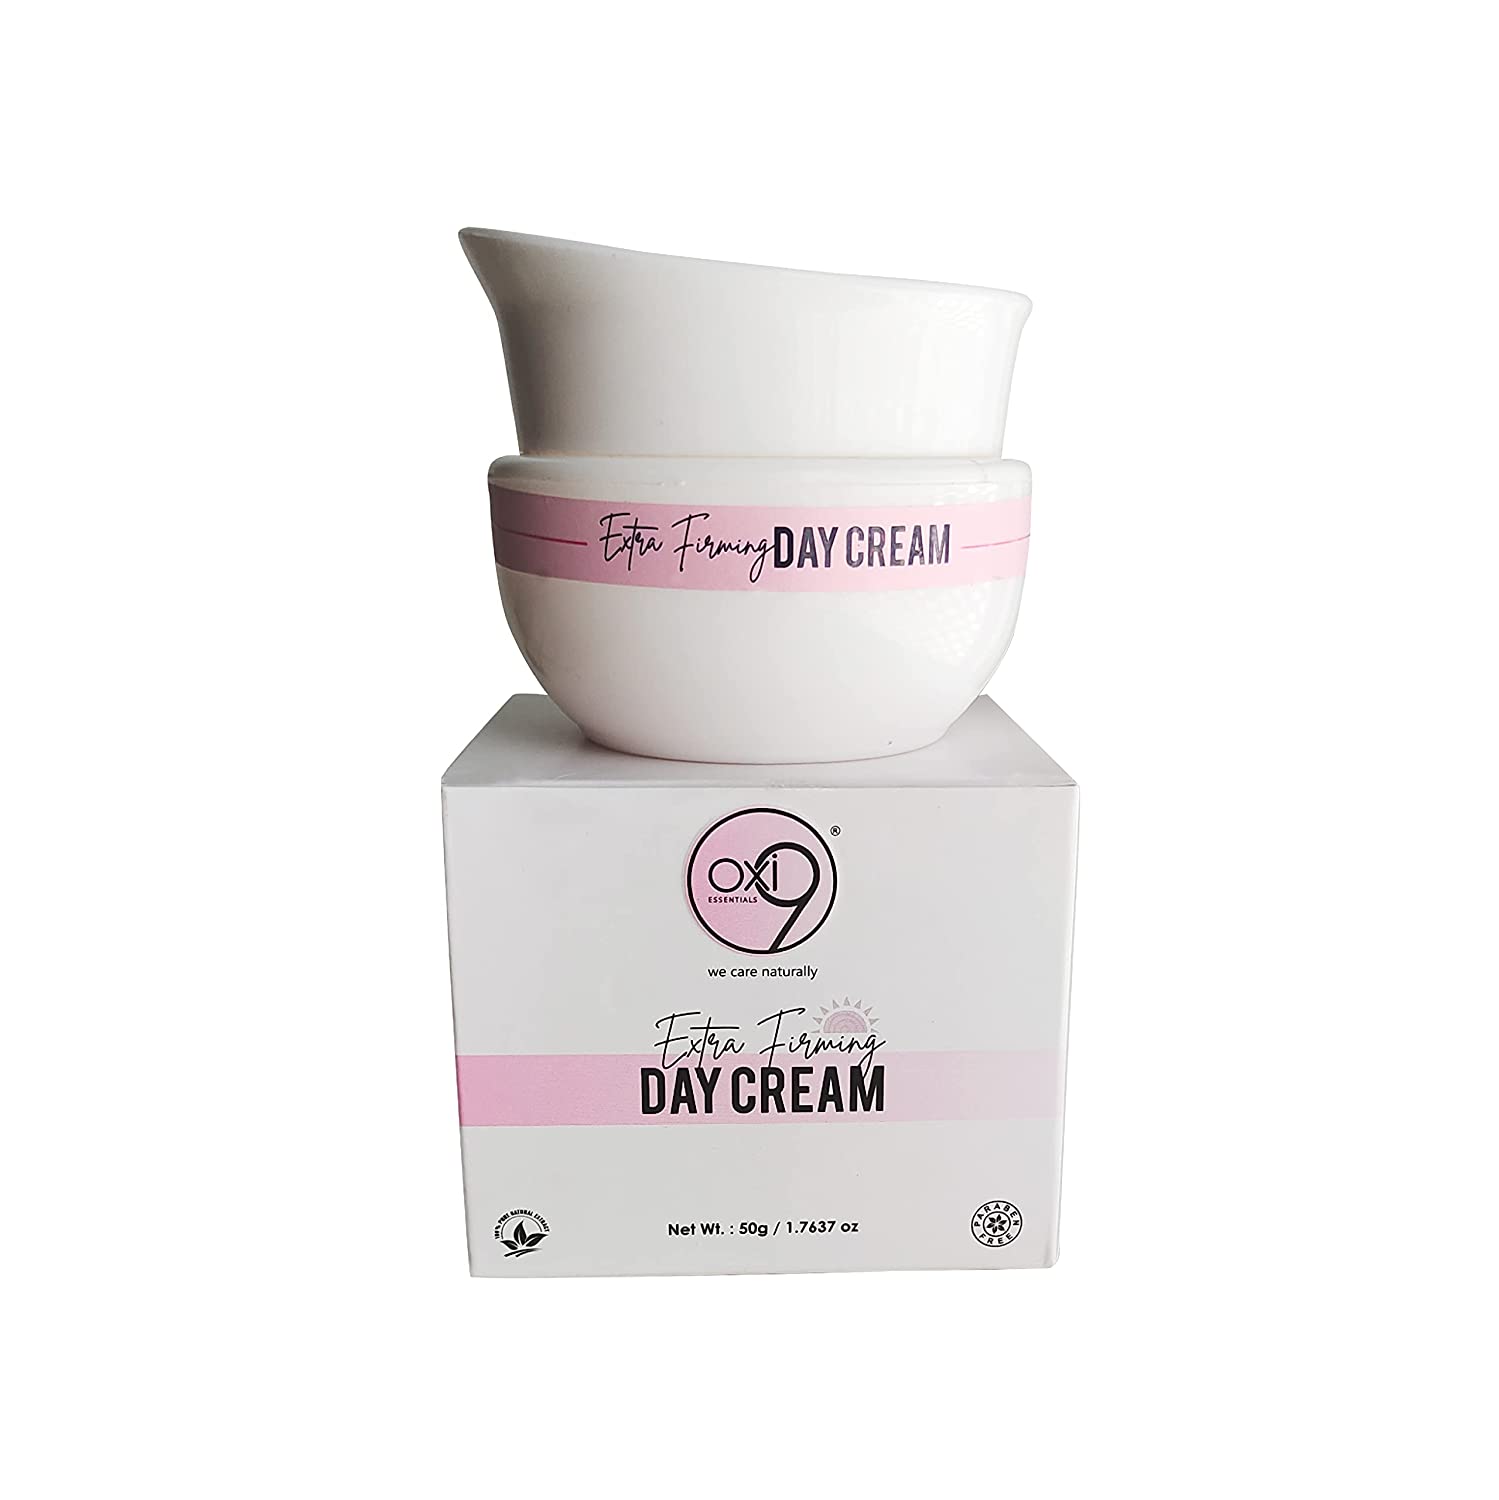 Extra Firming Day Cream 50g | Paraben Free